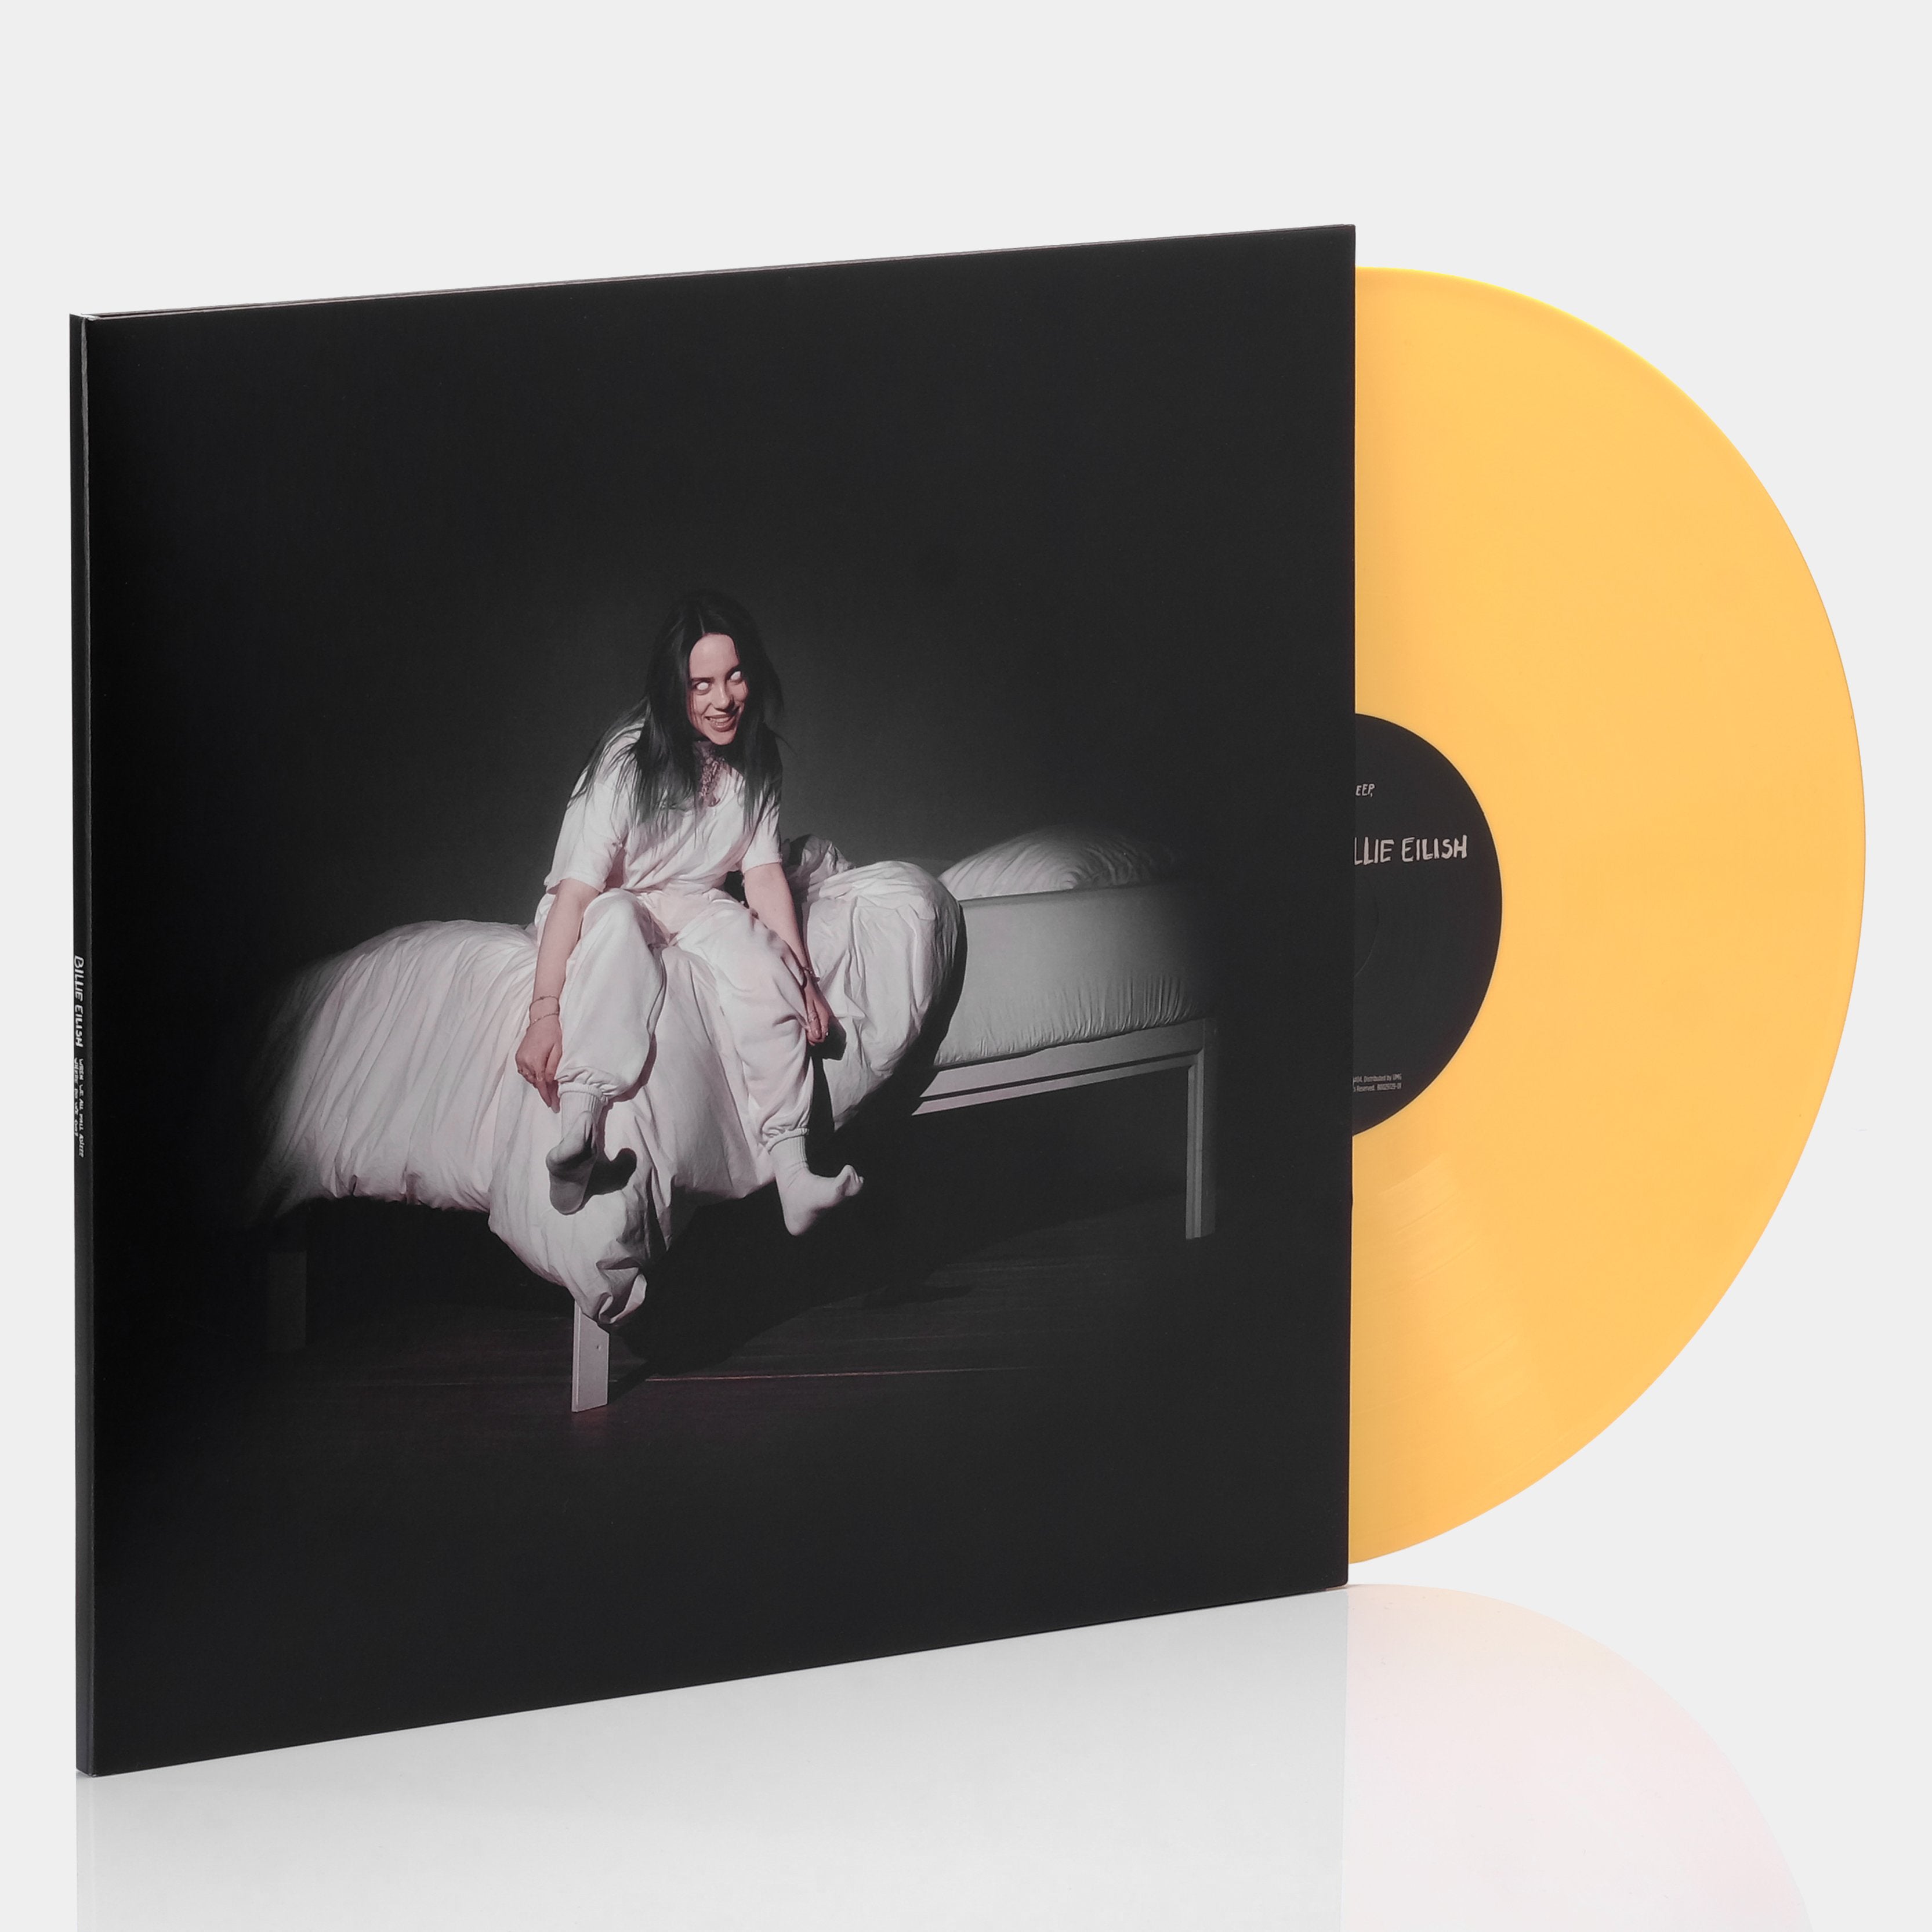 Billie Eilish - When We Fall Asleep, Where Do We Go? LP Pale Yellow Vinyl Record